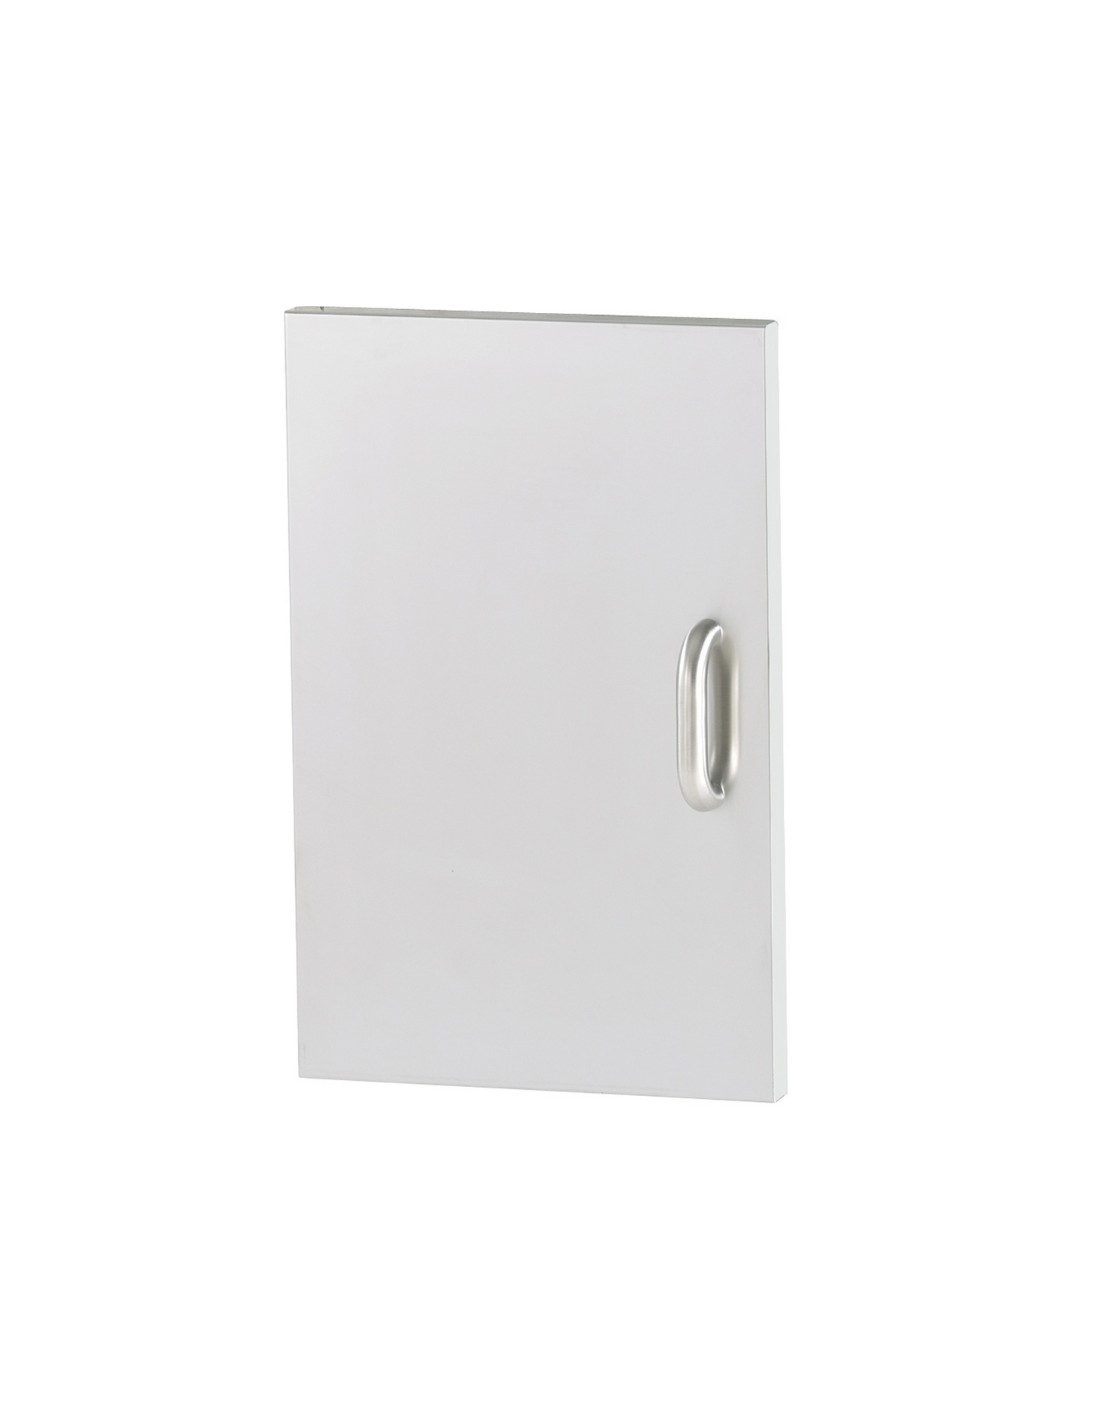 Door for open base cabinet - Dimensions cm 29.5 x 2.5 x 47 h